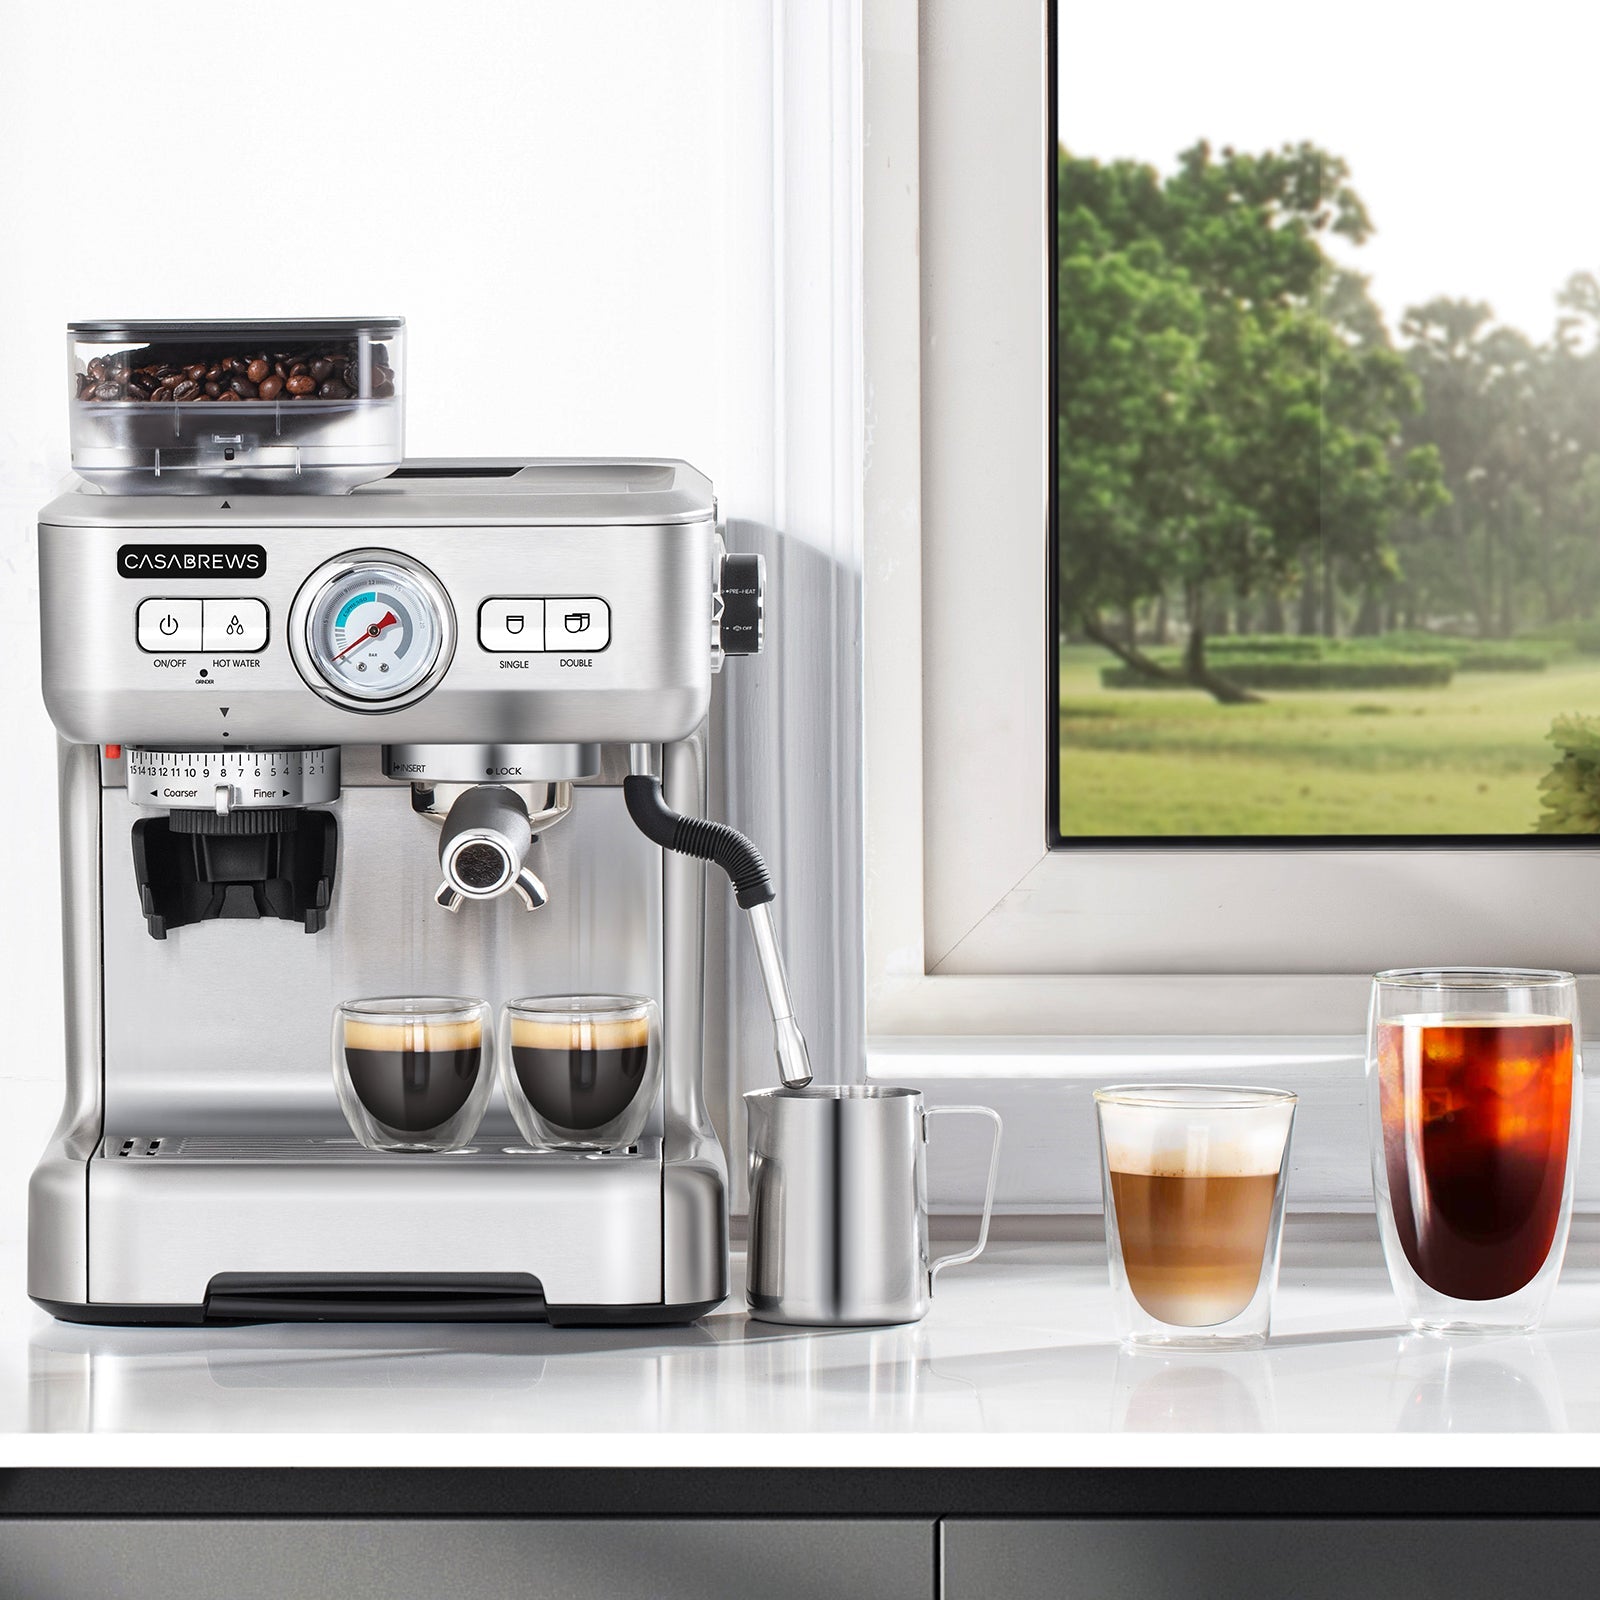 Costway 20 Bar Espresso Coffee Maker 2 Cup /w Built-in Steamer